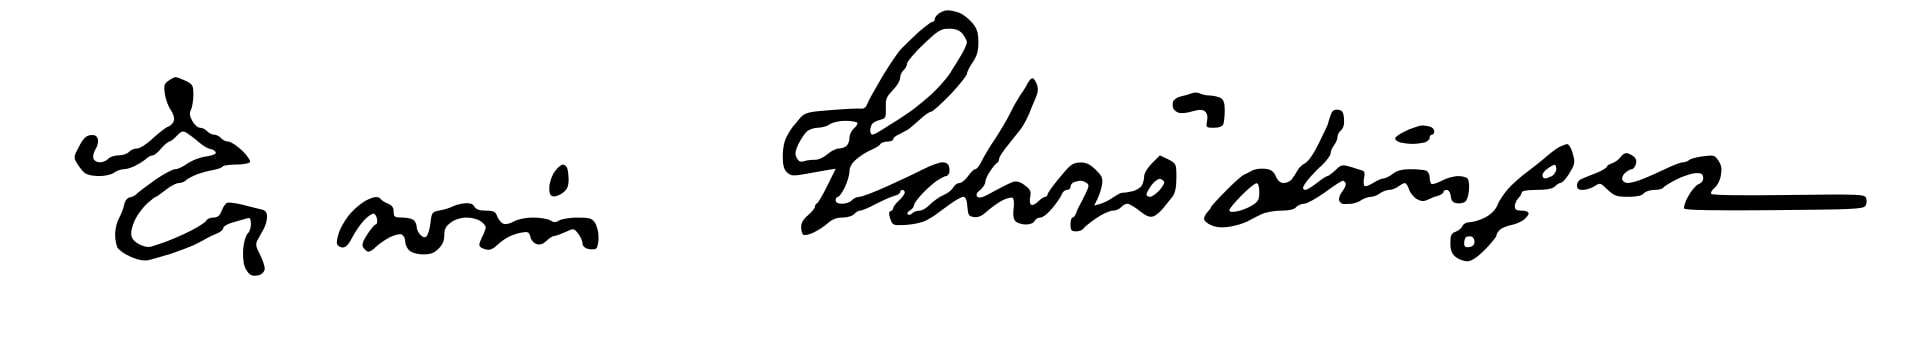 Erwin Schrödinger Signature